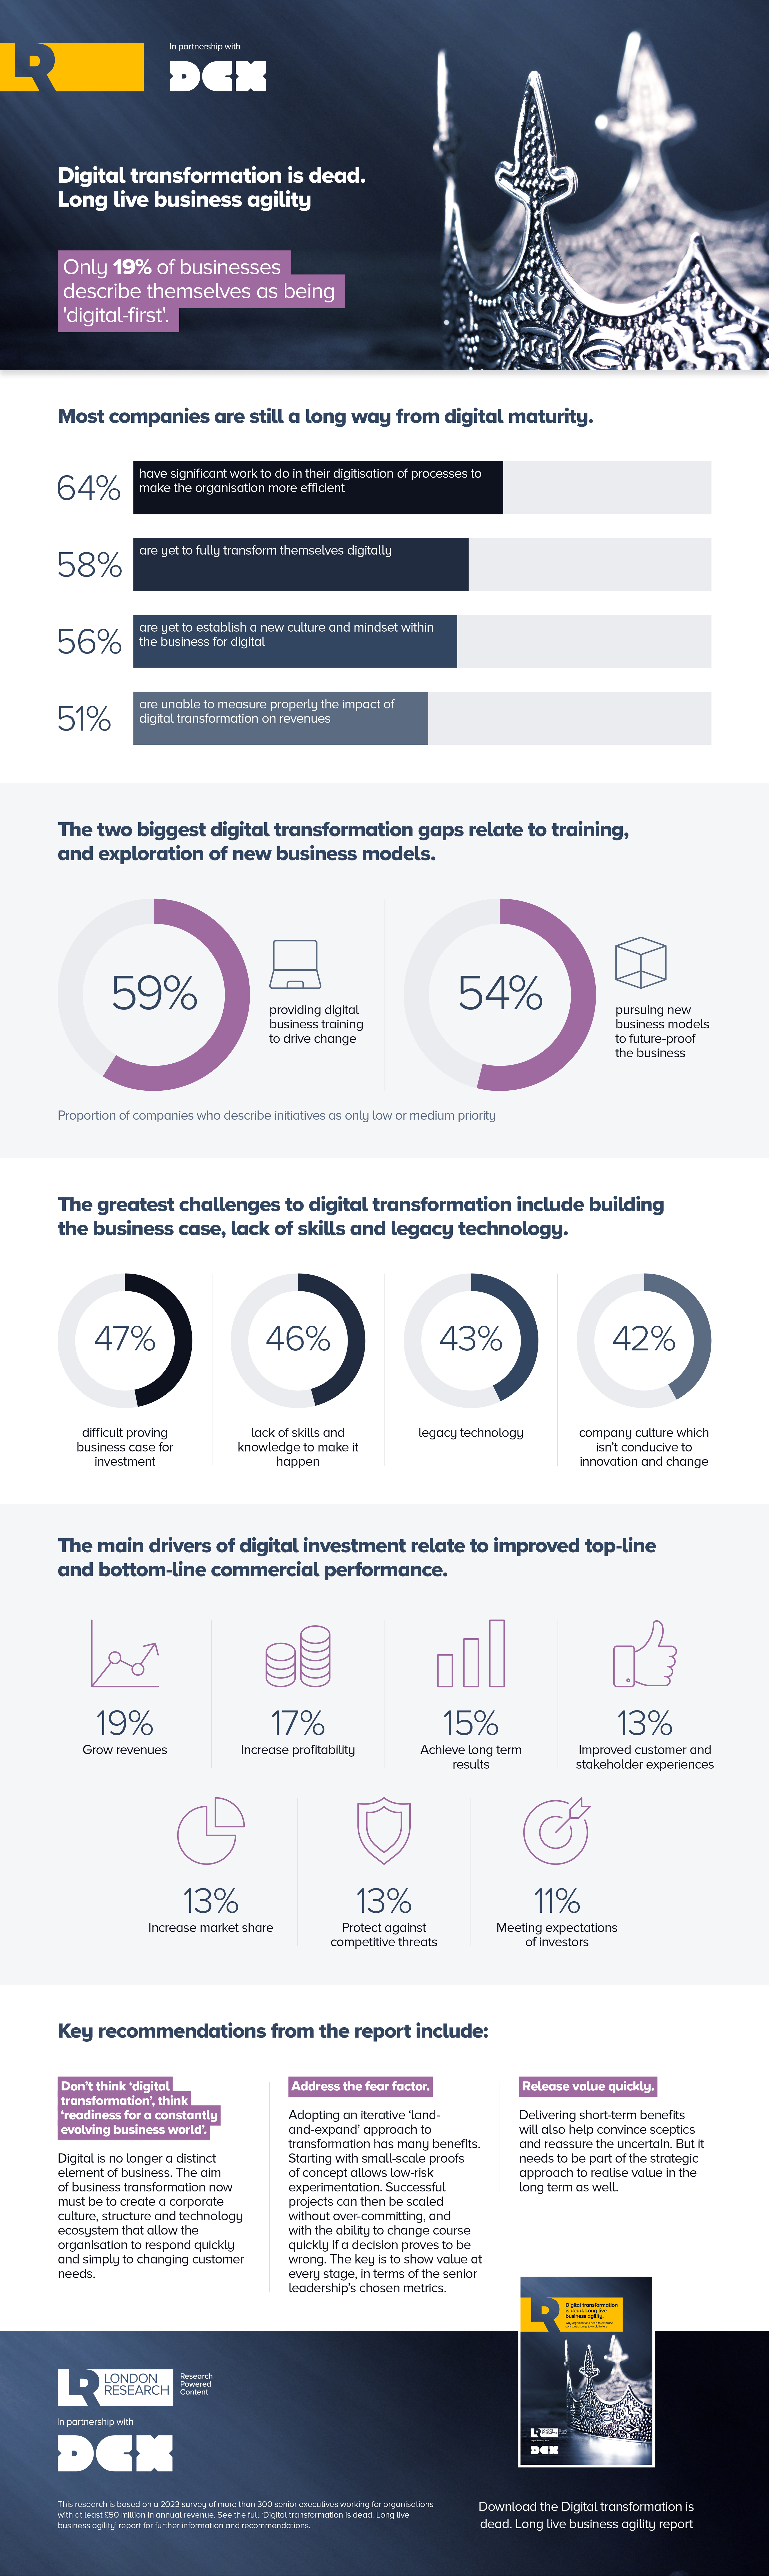 DCX_Digital Transformation is Dead_Infographic